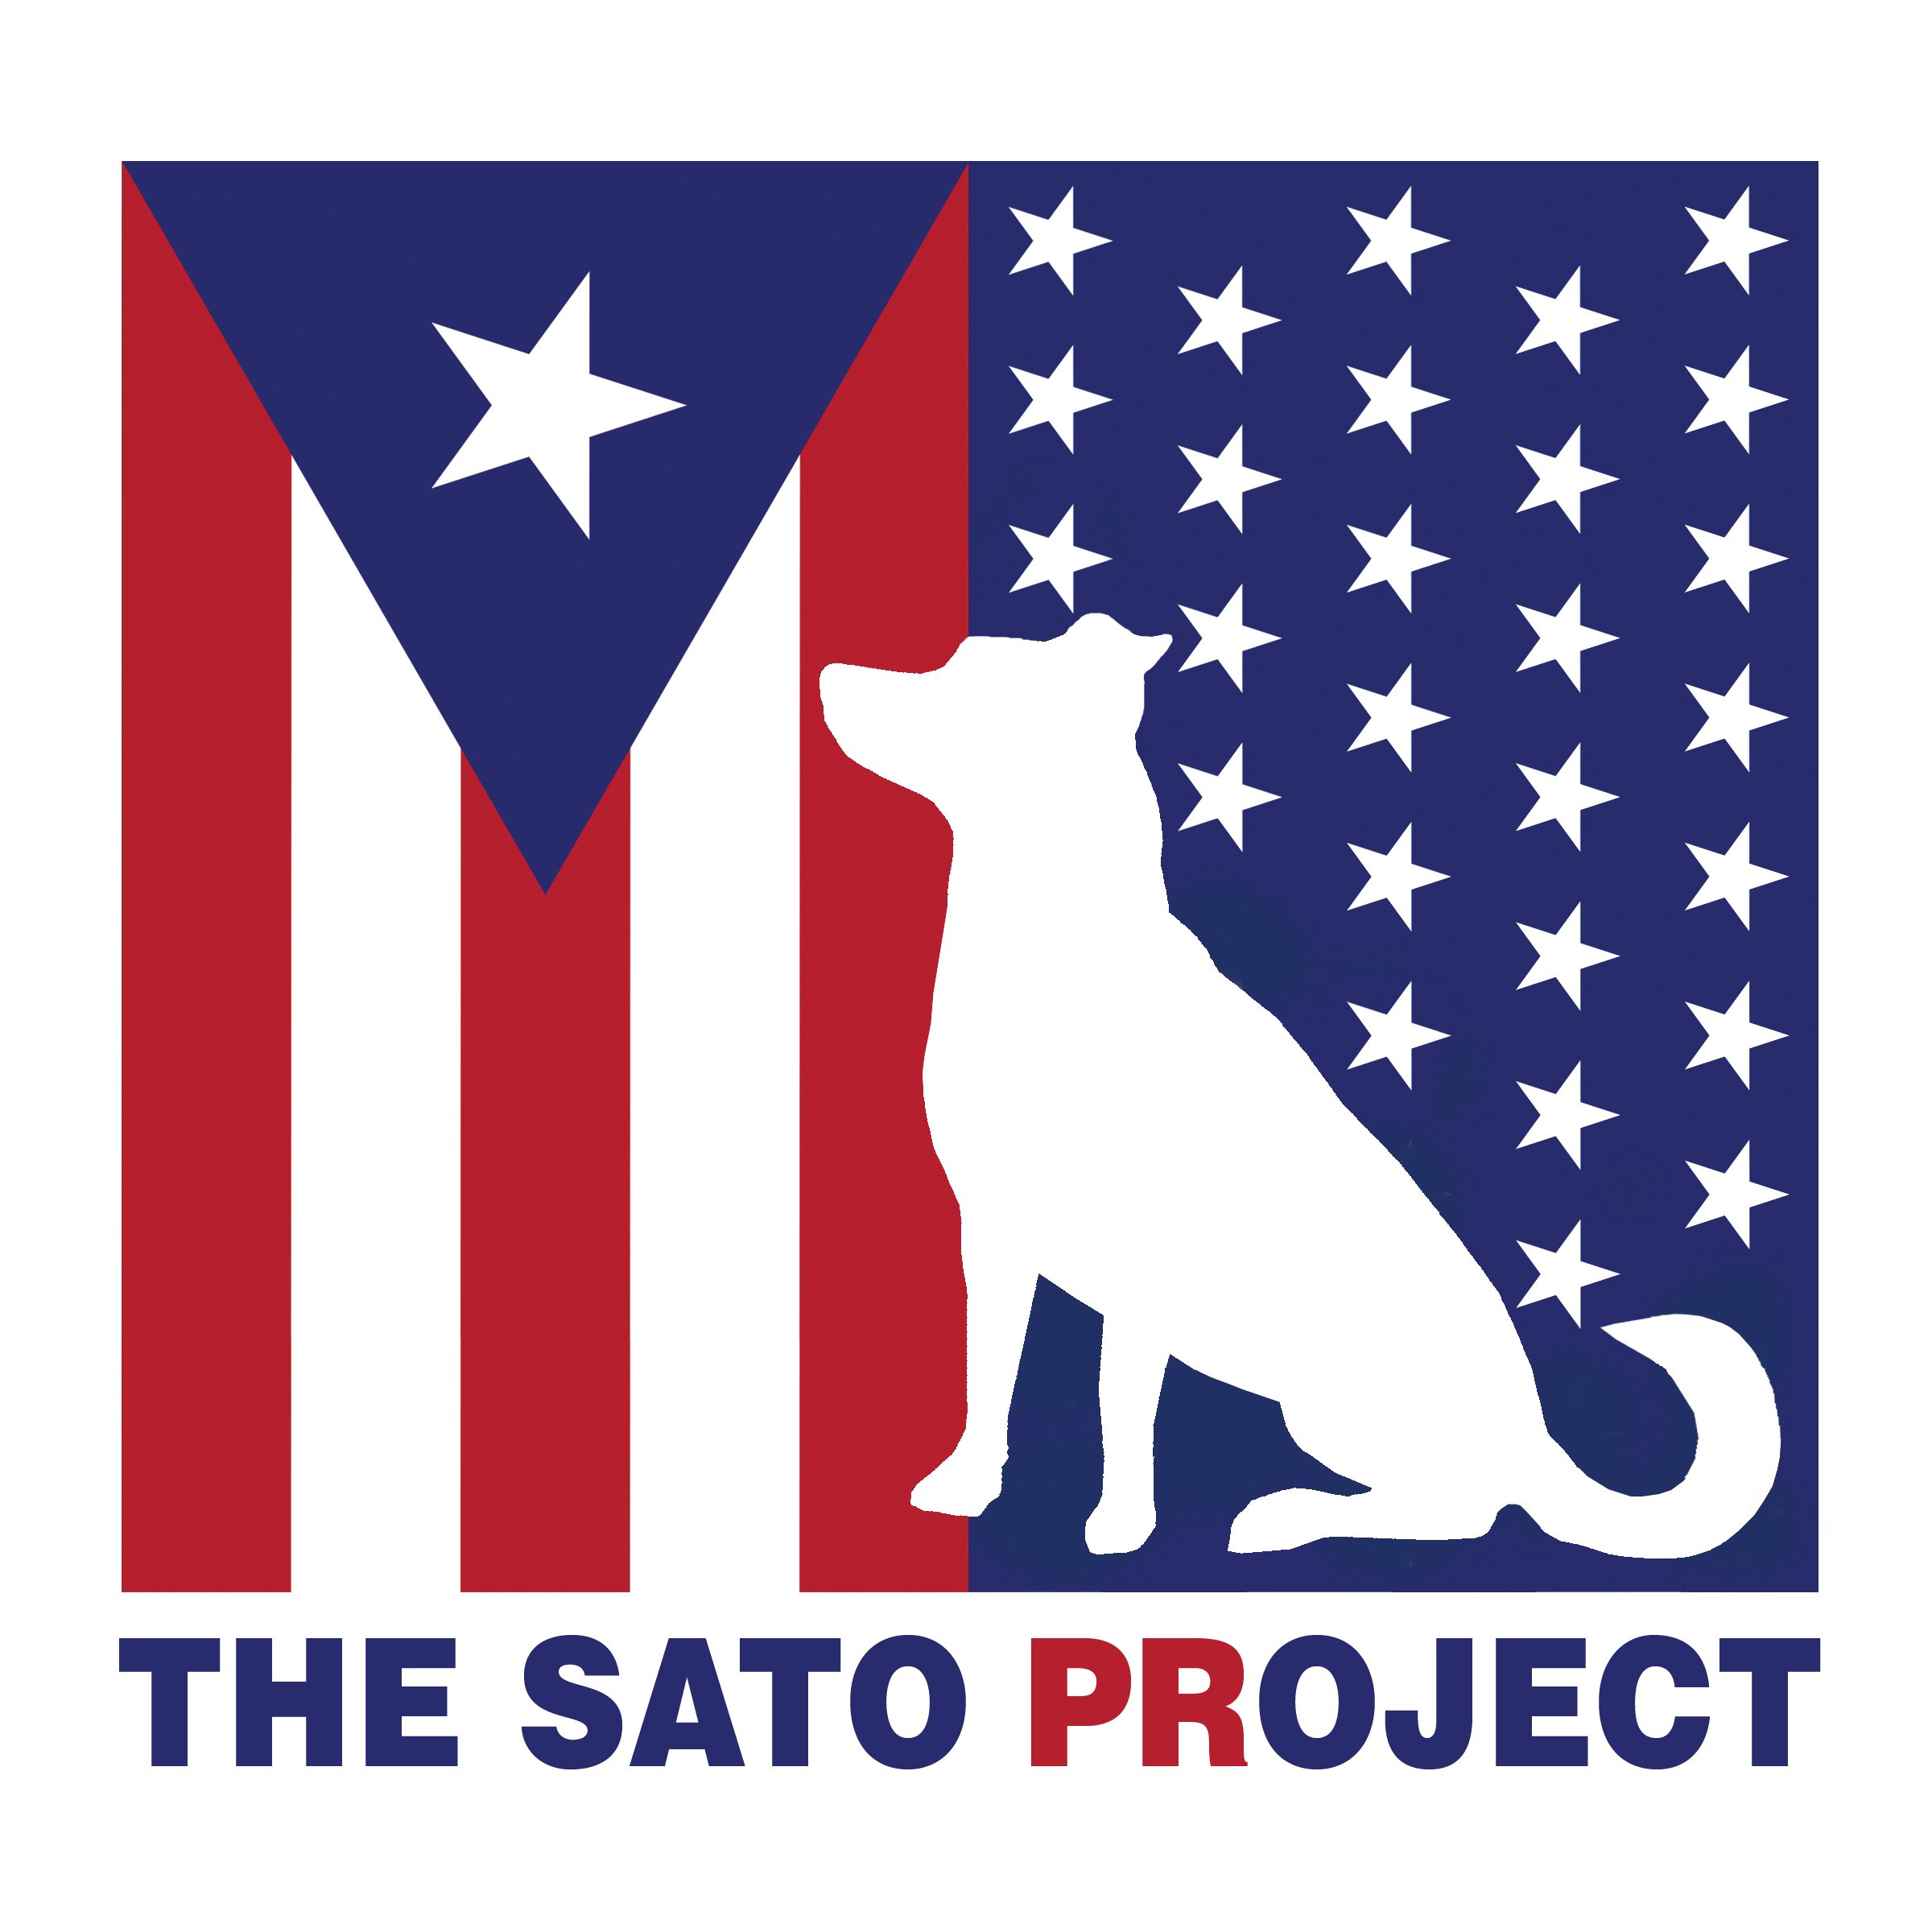 THE SATO PROJECT